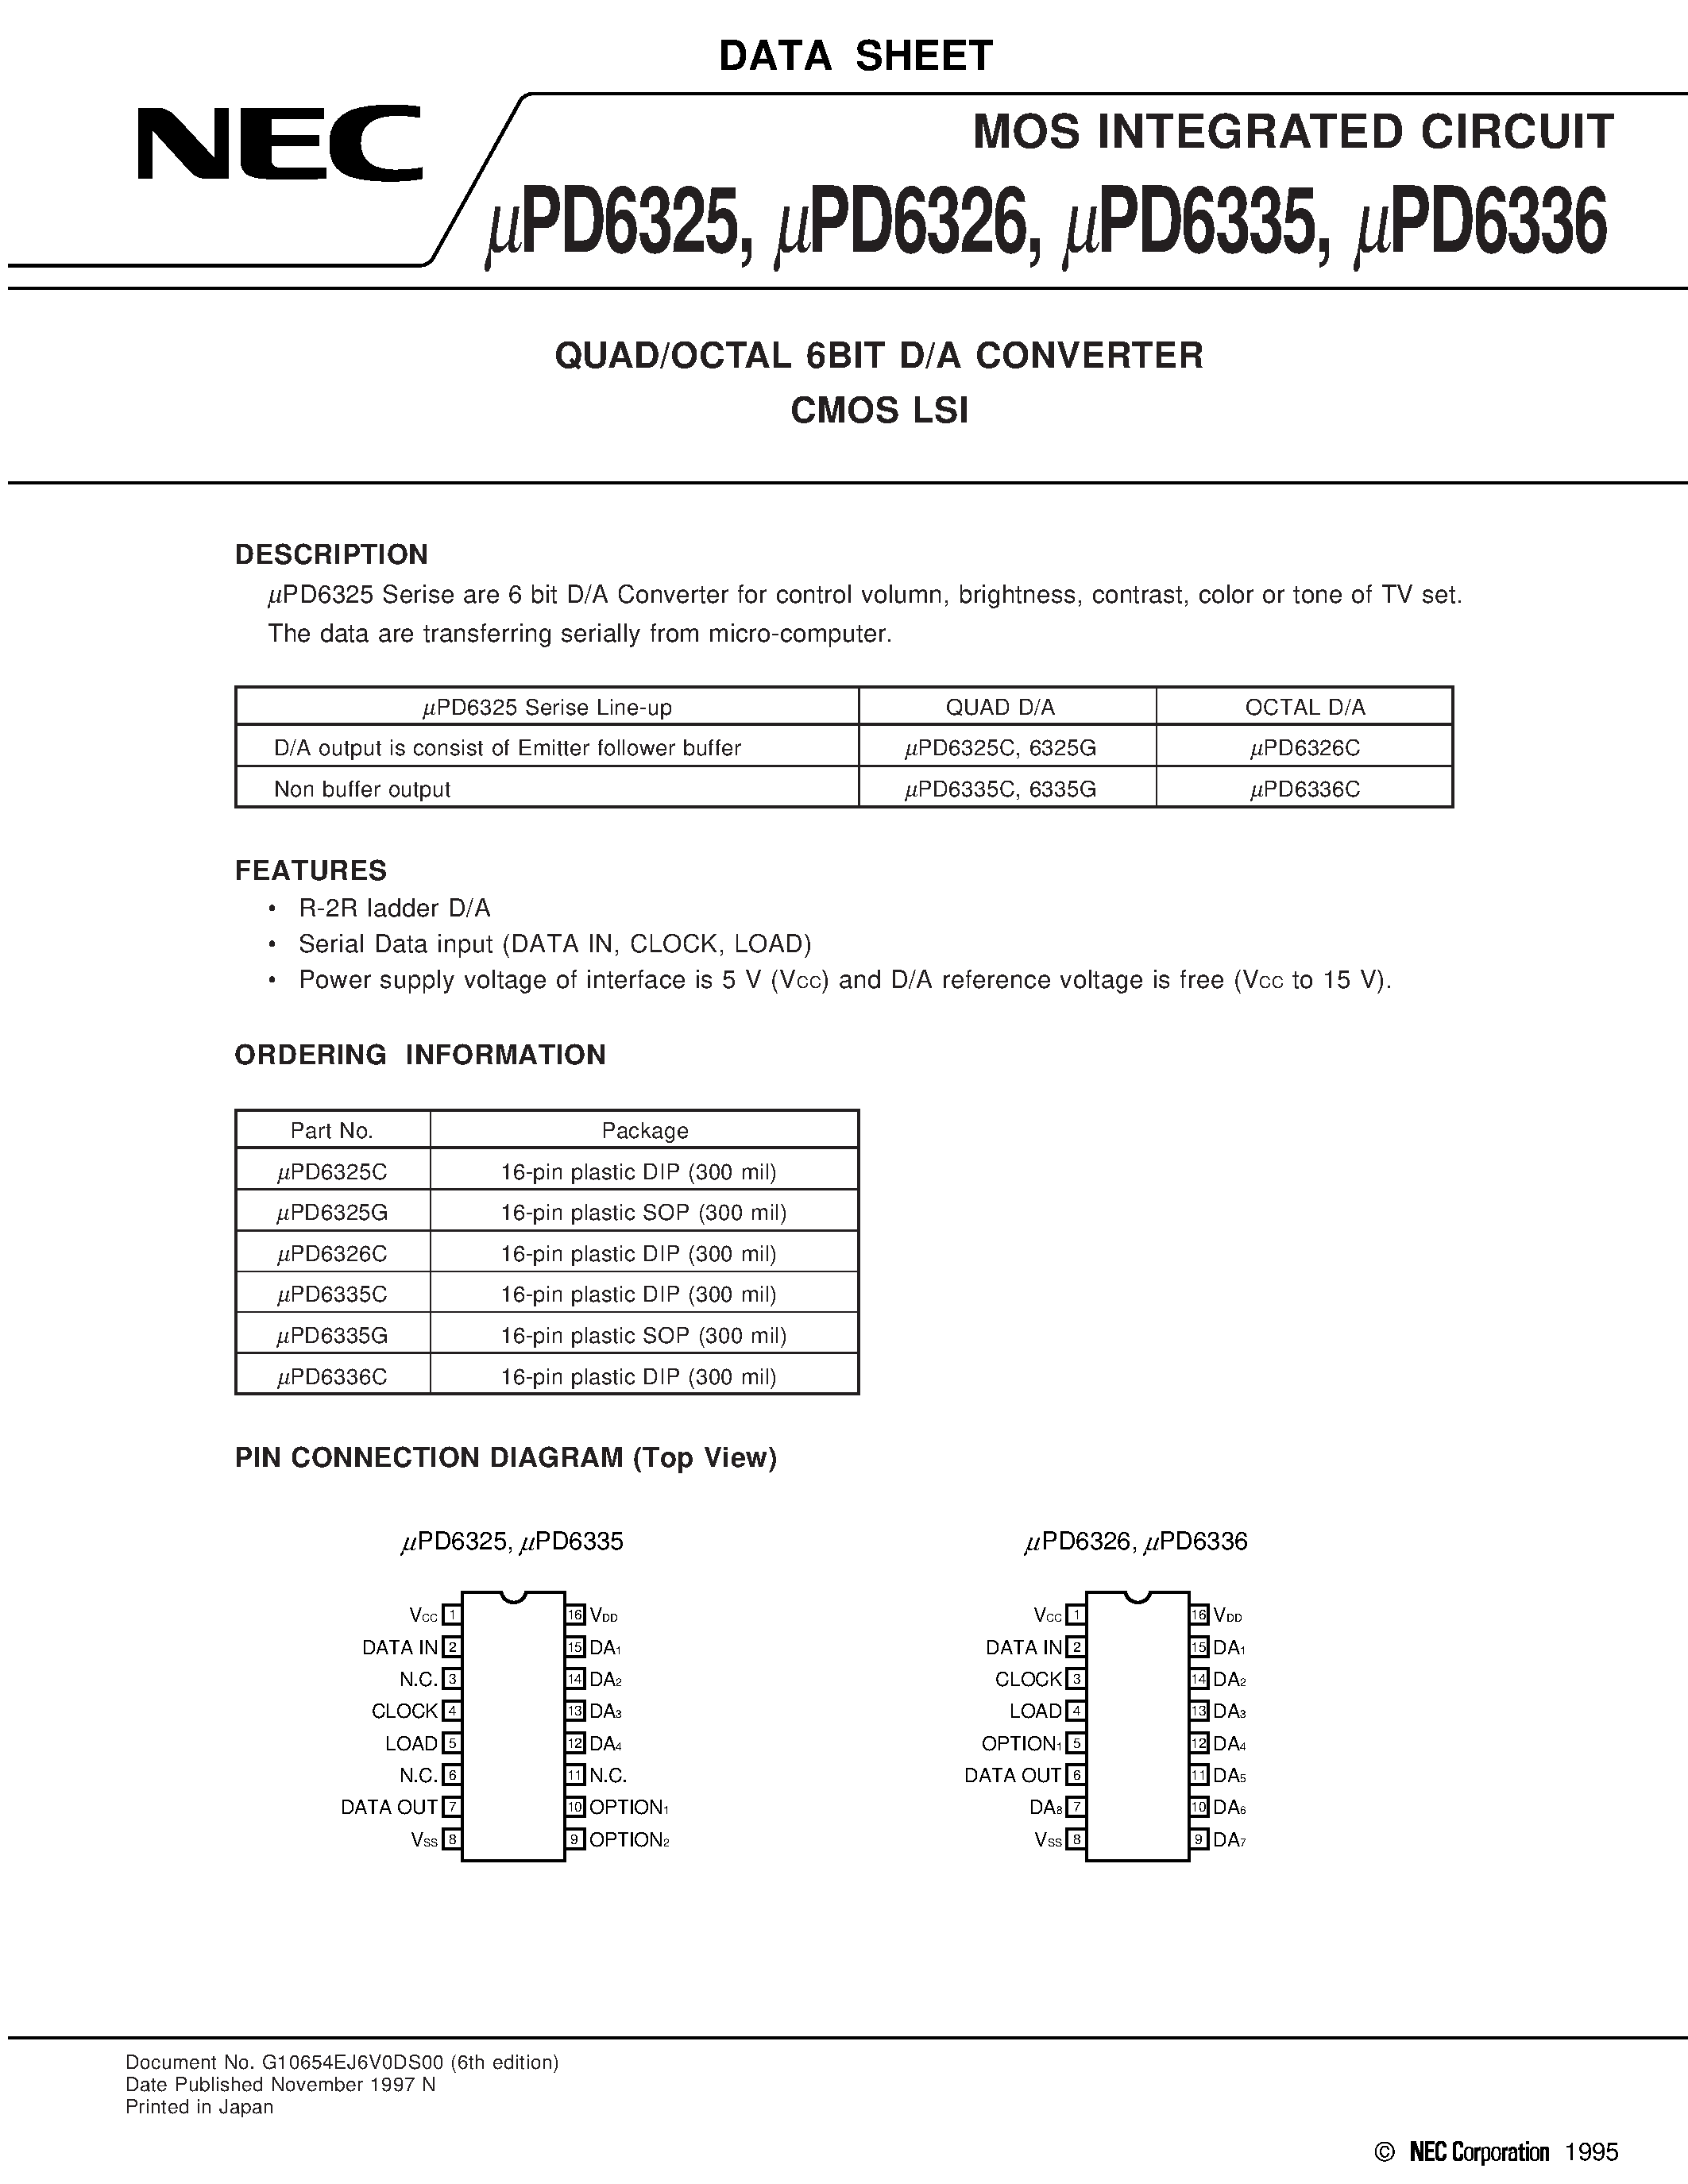 Даташит UPD6336C - QUAD/OCTAL 6BIT D/A CONVERTER CMOS LSI страница 1